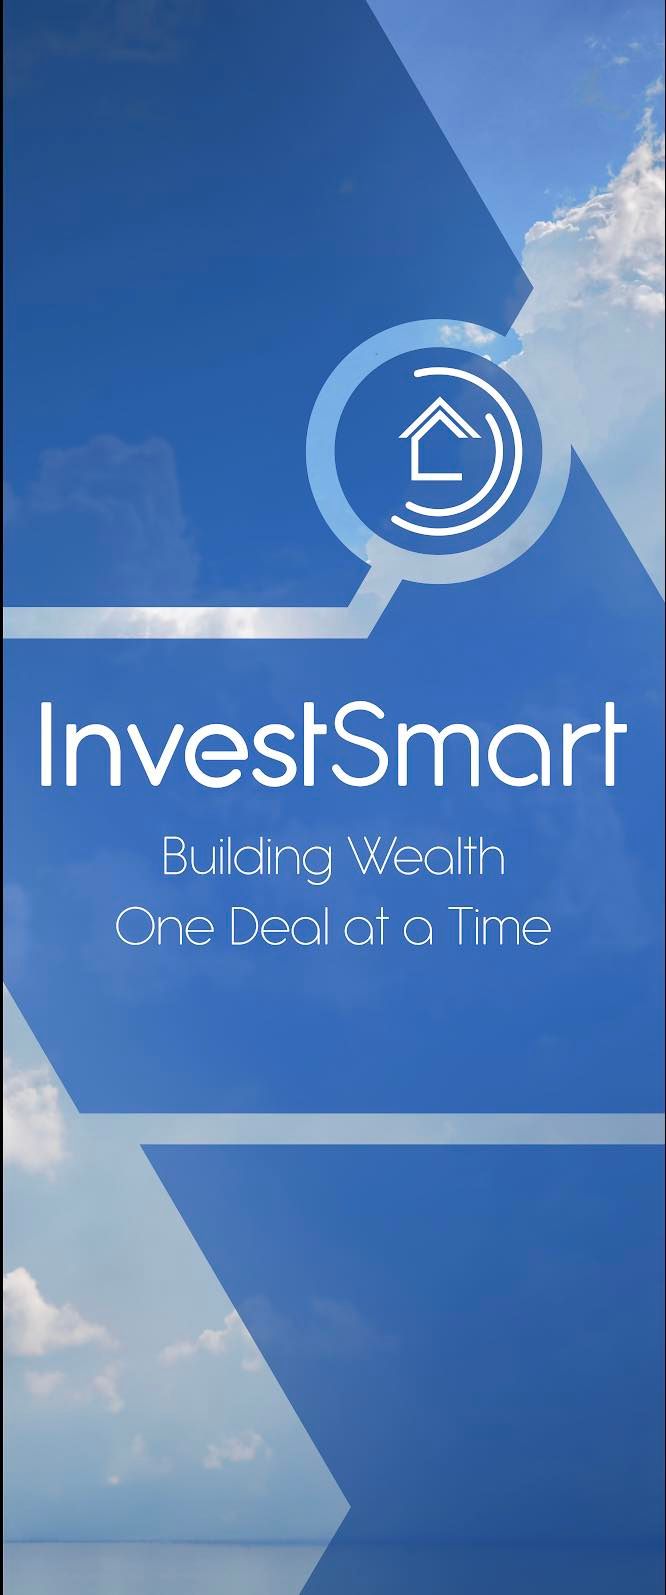 InvestSmart June 1st Real Estate Investment Meeting